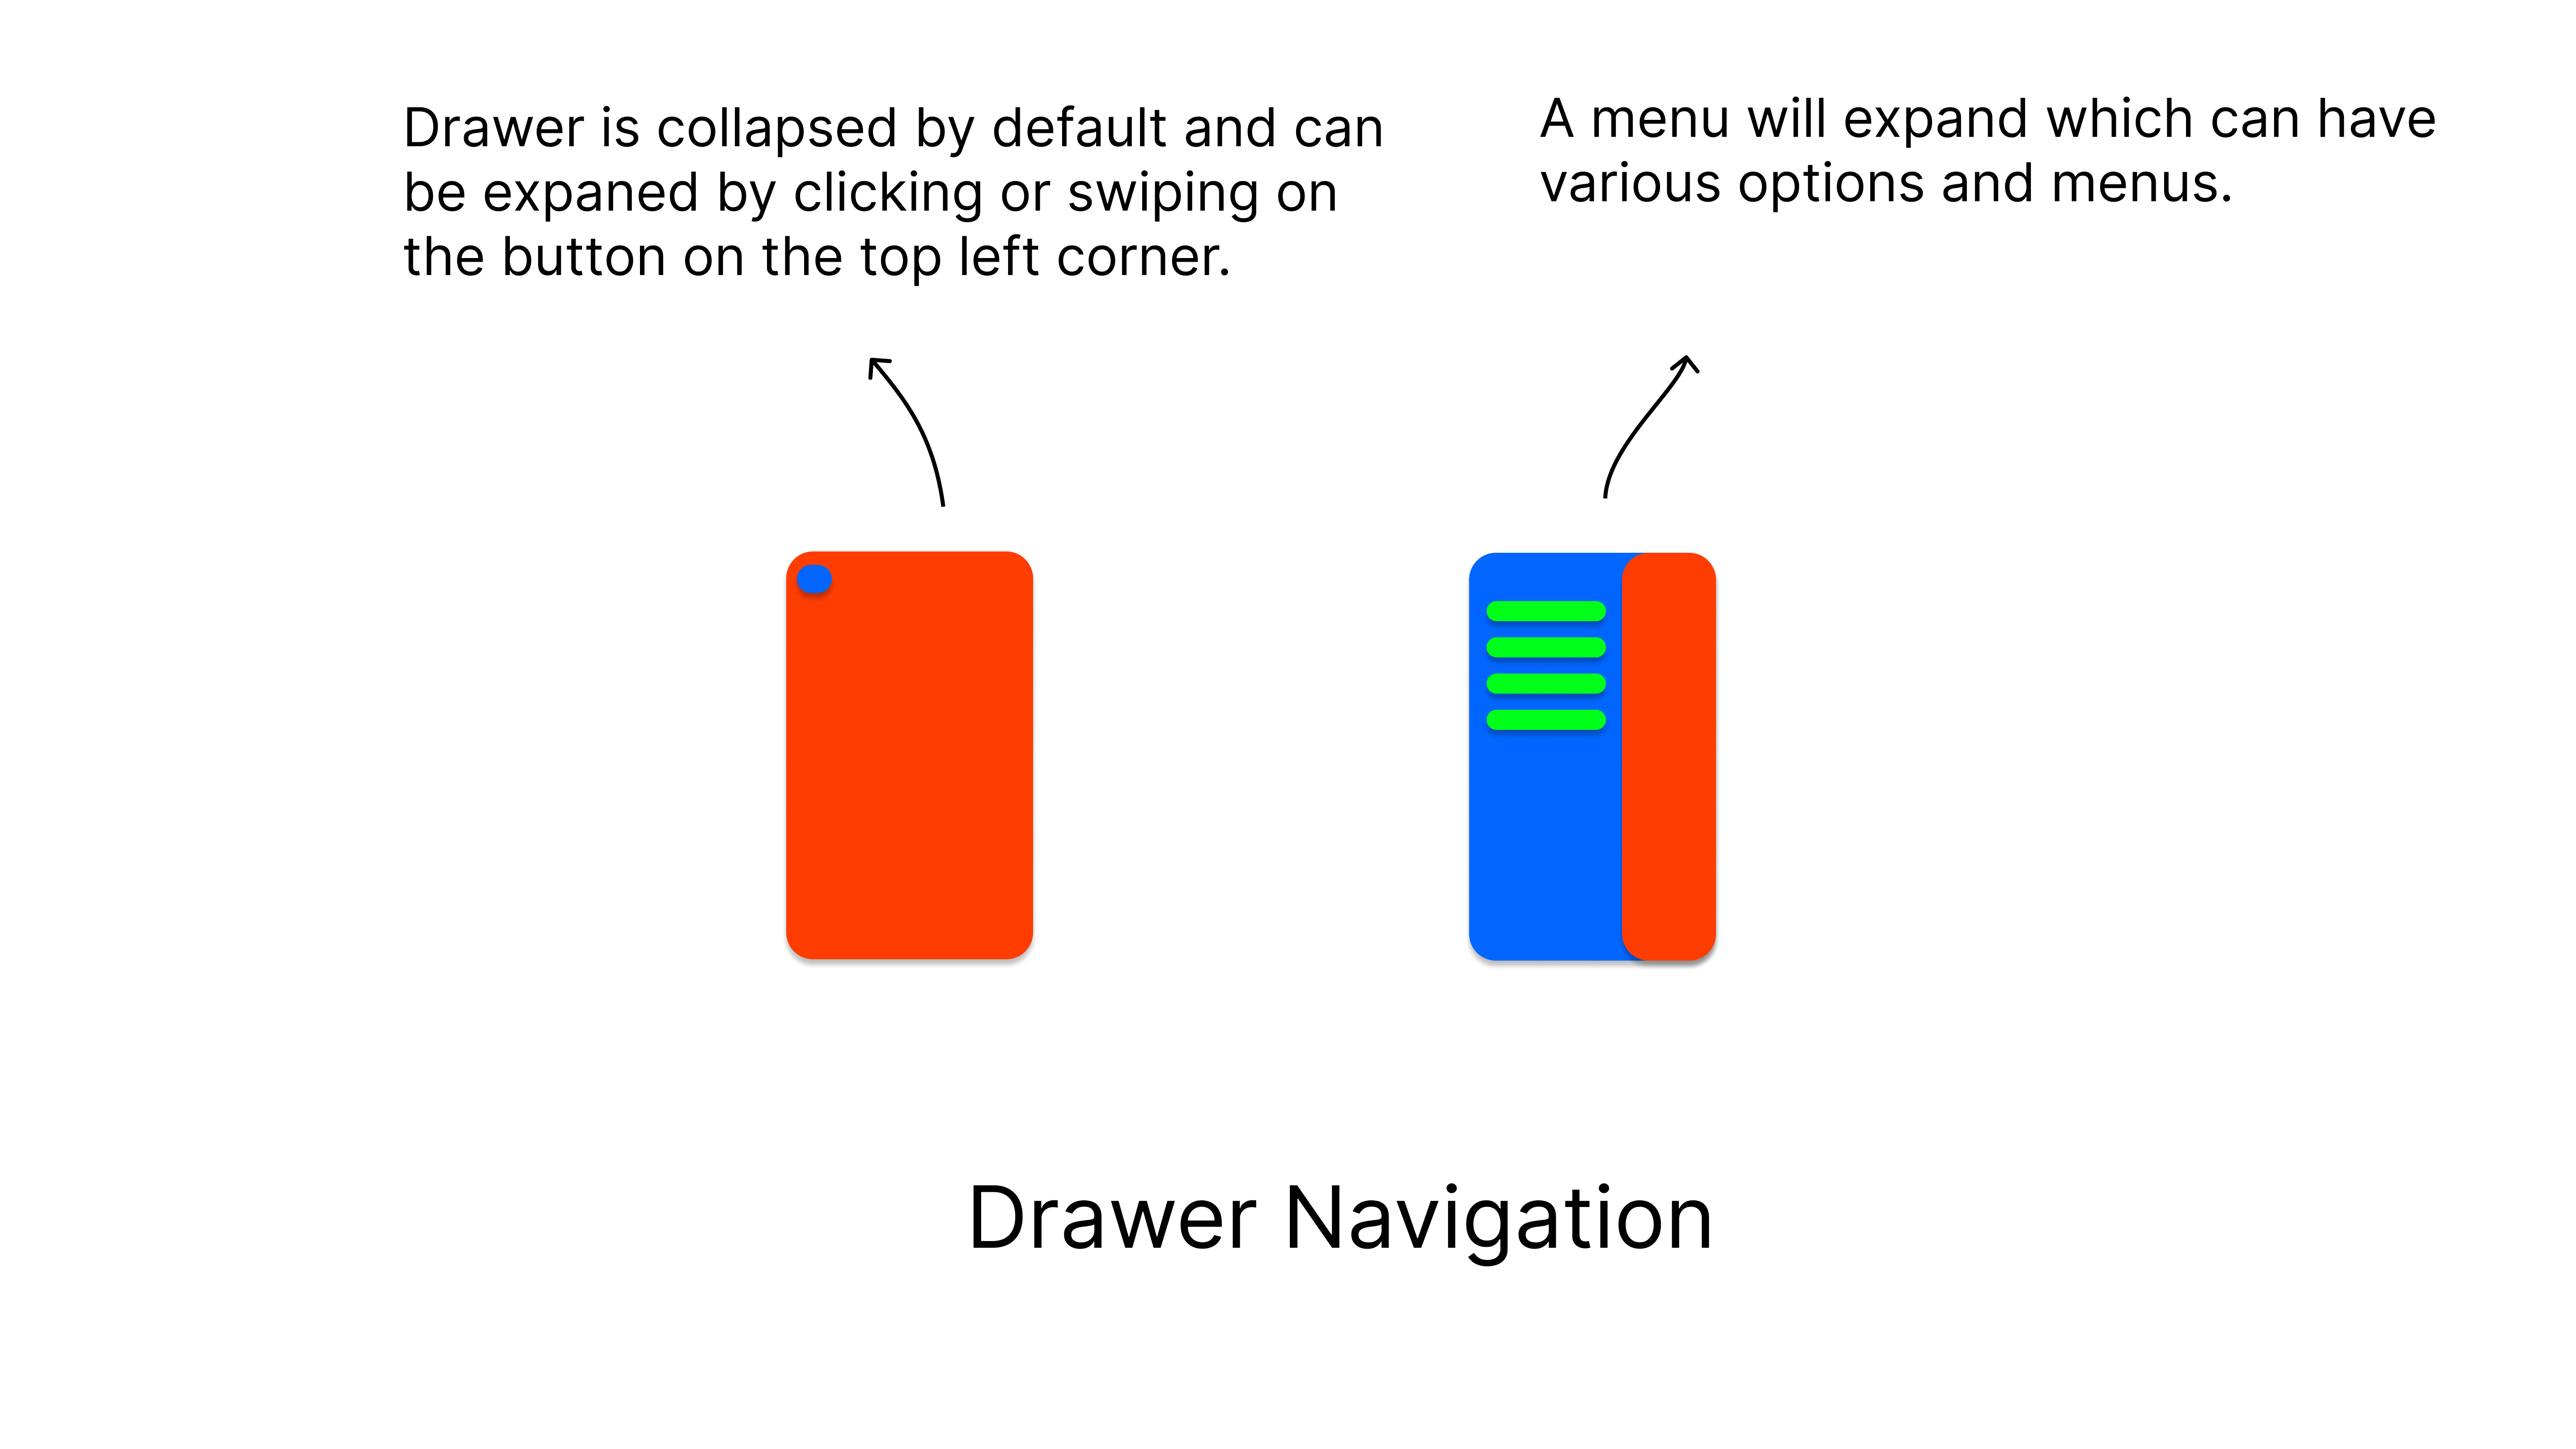 Drawer Navigation